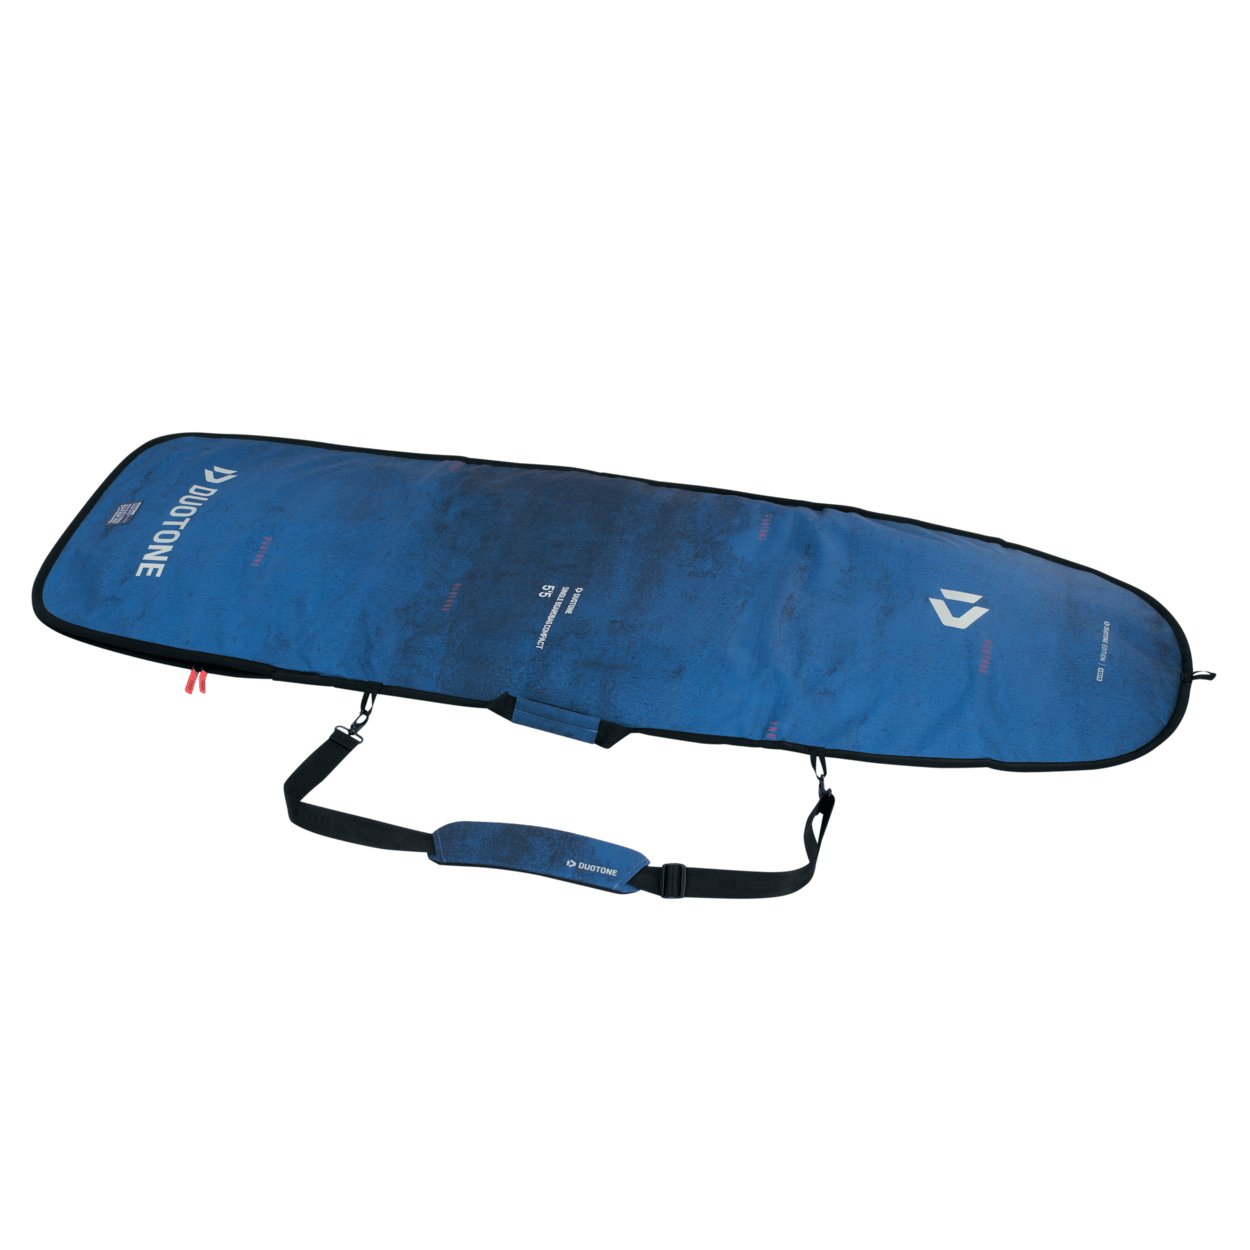 Duotone Boardbag Single Compact 2022 - Worthing Watersports - 9010583049243 - Gear - Duotone Kiteboarding